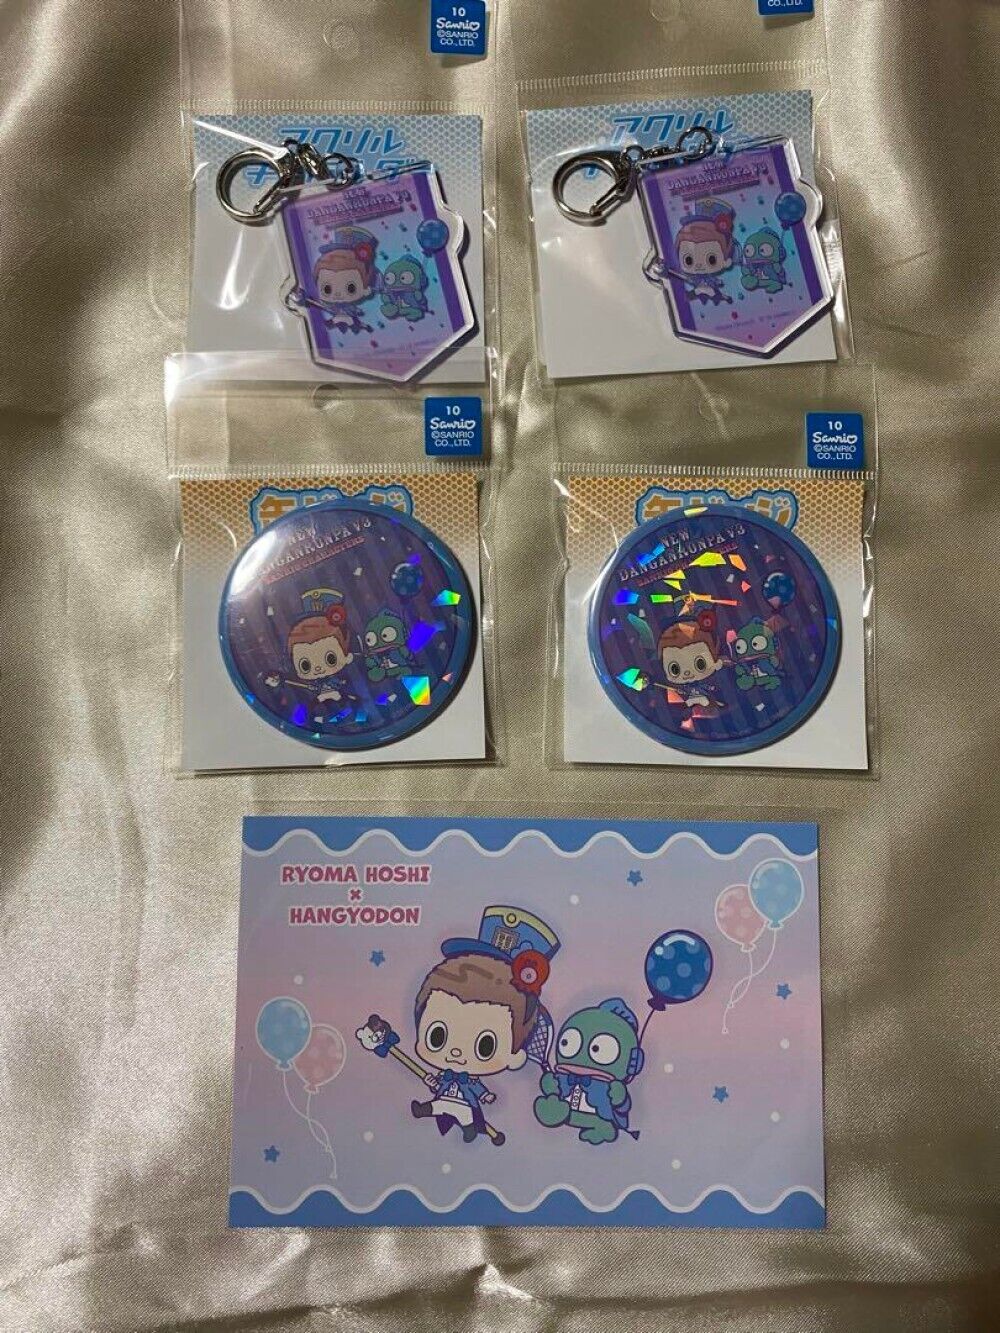 Danganronpa Sanrio Lottery Hoshi Ryoma Acrylic Key Chain Can Badge Post Card